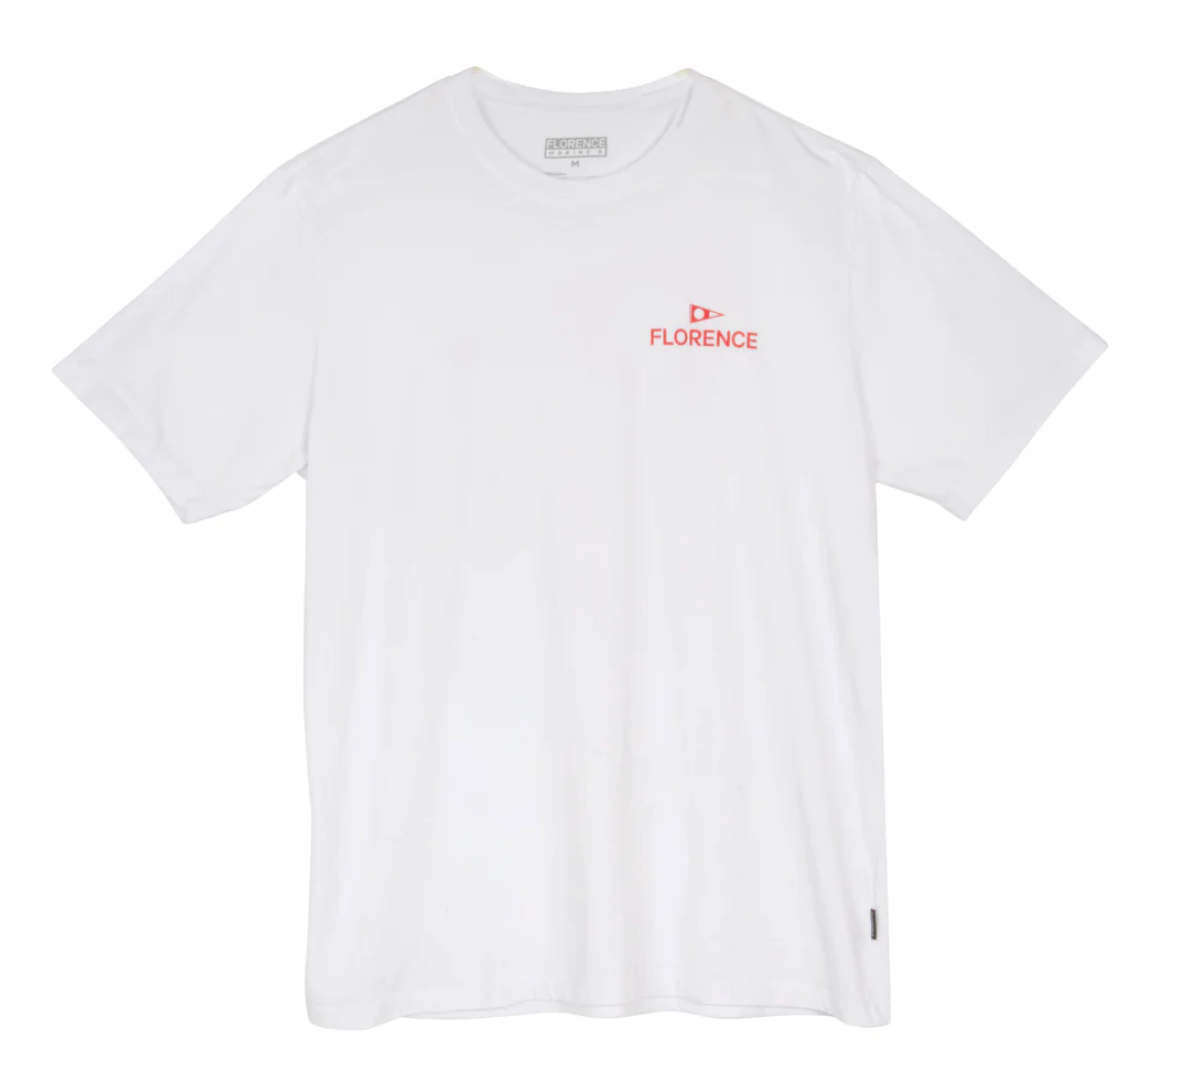 Florence Marine X - Crew T-Shirt White - Board Store Florence Marine XShirts & Tops  